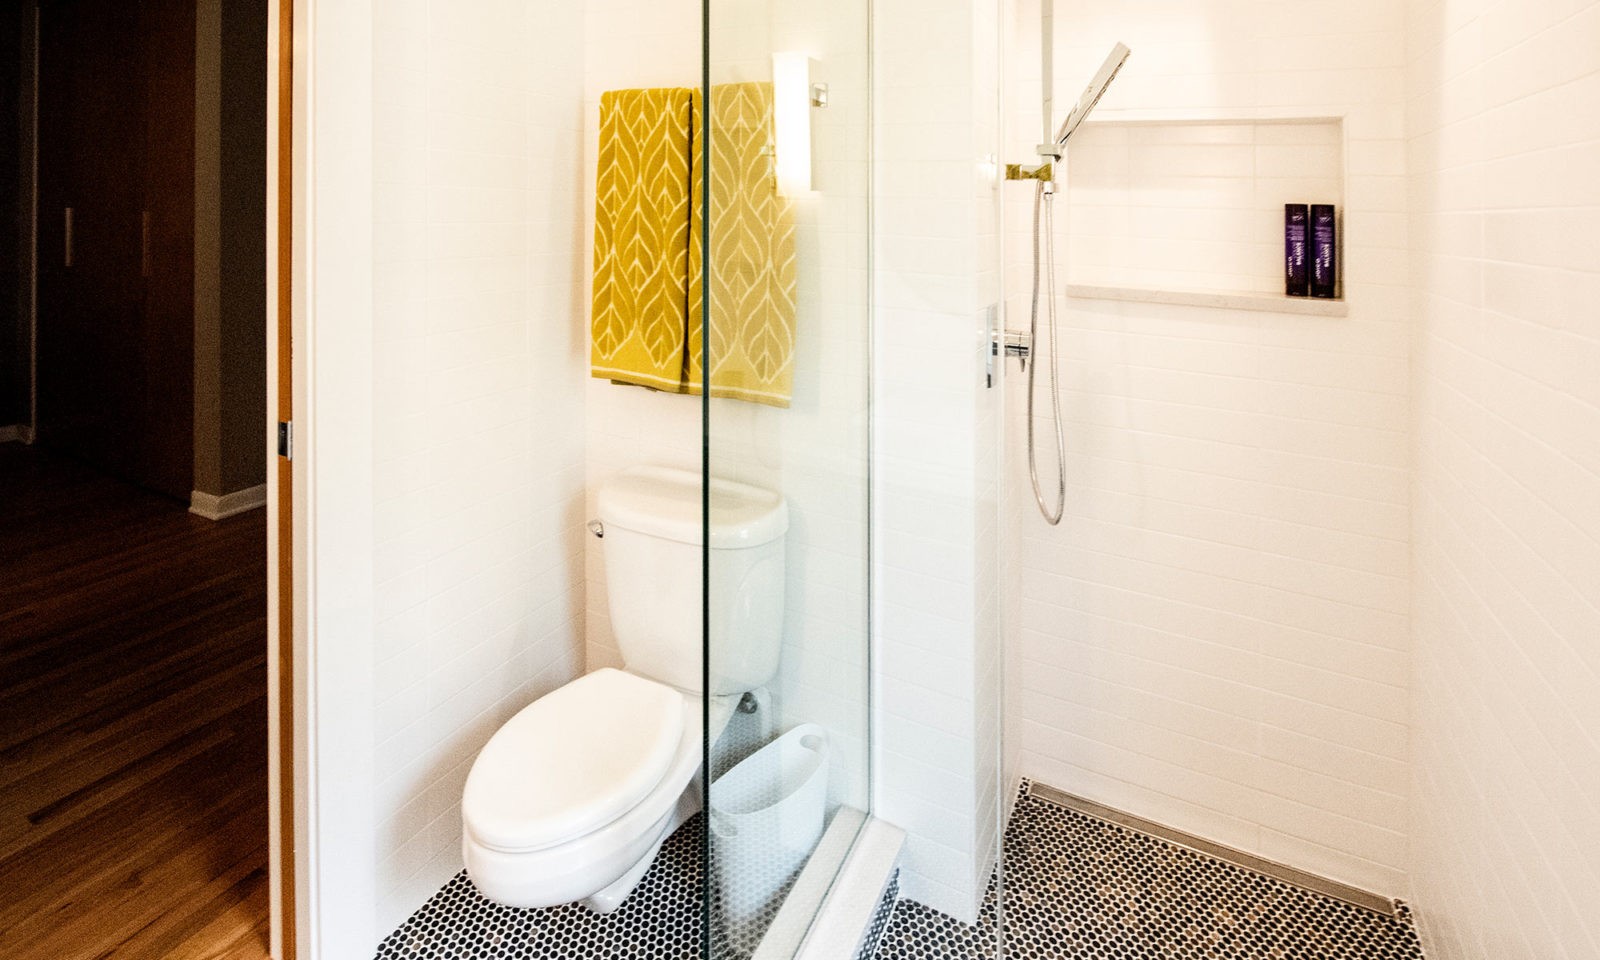 Riverside Illinois bathroom remodel glass shower enclosure and toilet